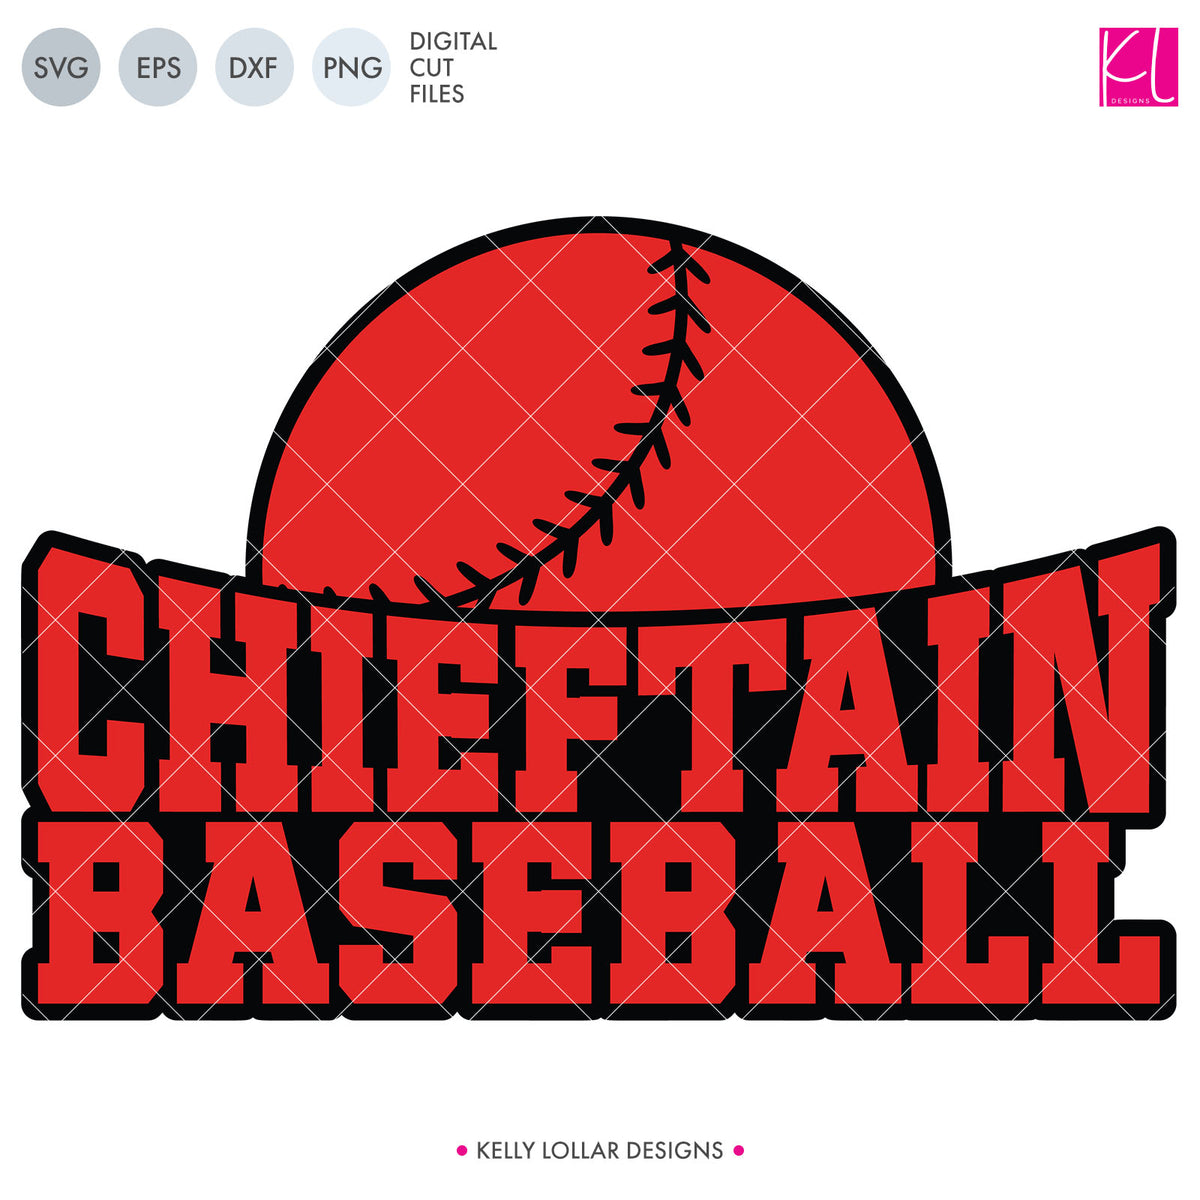 Chieftains Baseball &amp; Softball Bundle | SVG DXF EPS PNG Cut Files